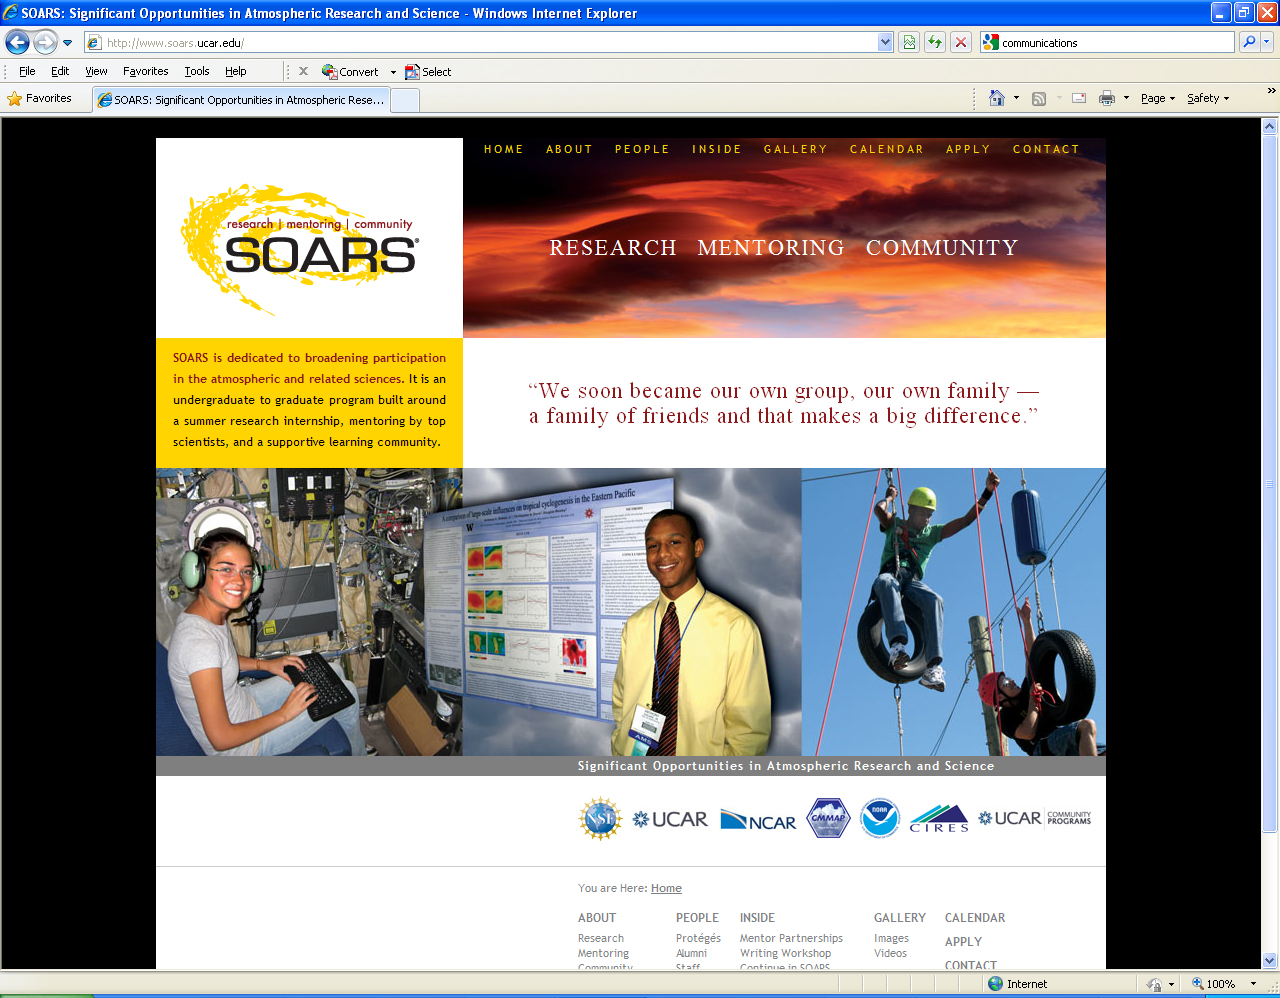 SOARS: Website Launch